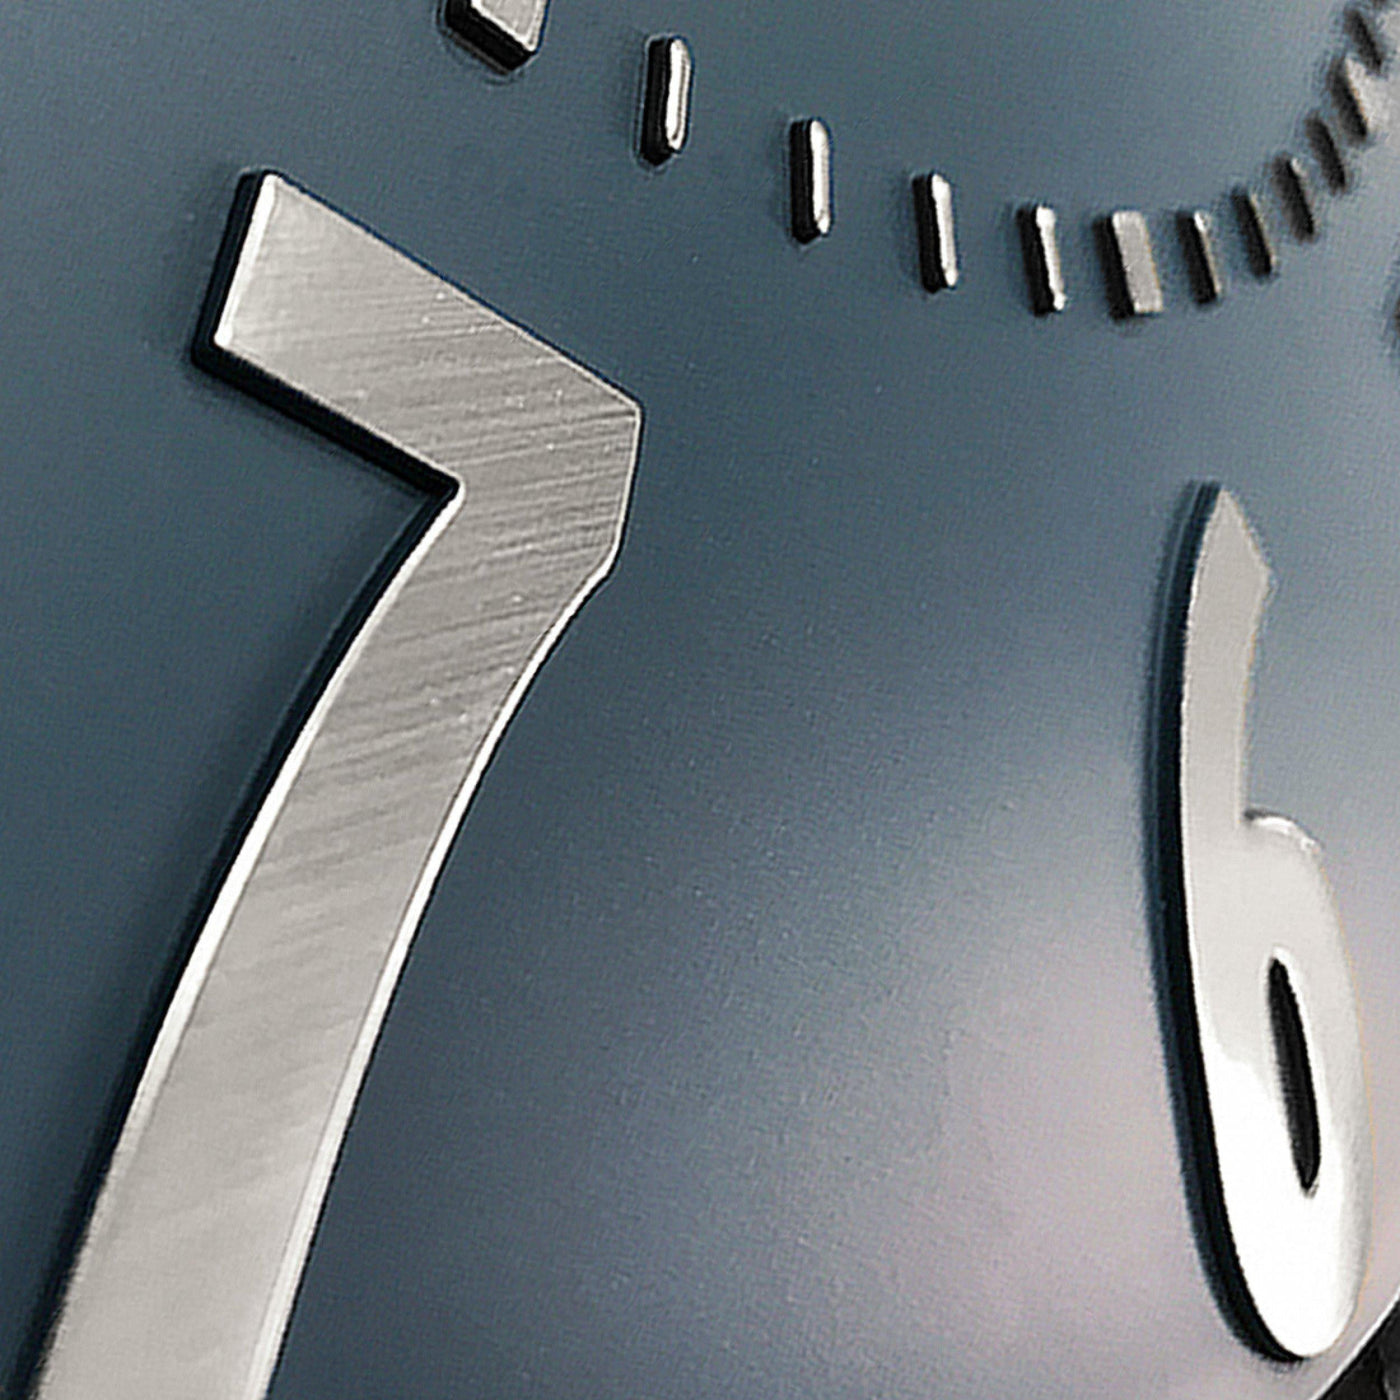 Thomas Kent Mulberry Wall Clock 12" (30 cm) Midnight Blue *STOCK DUE JAN* - timeframedclocks